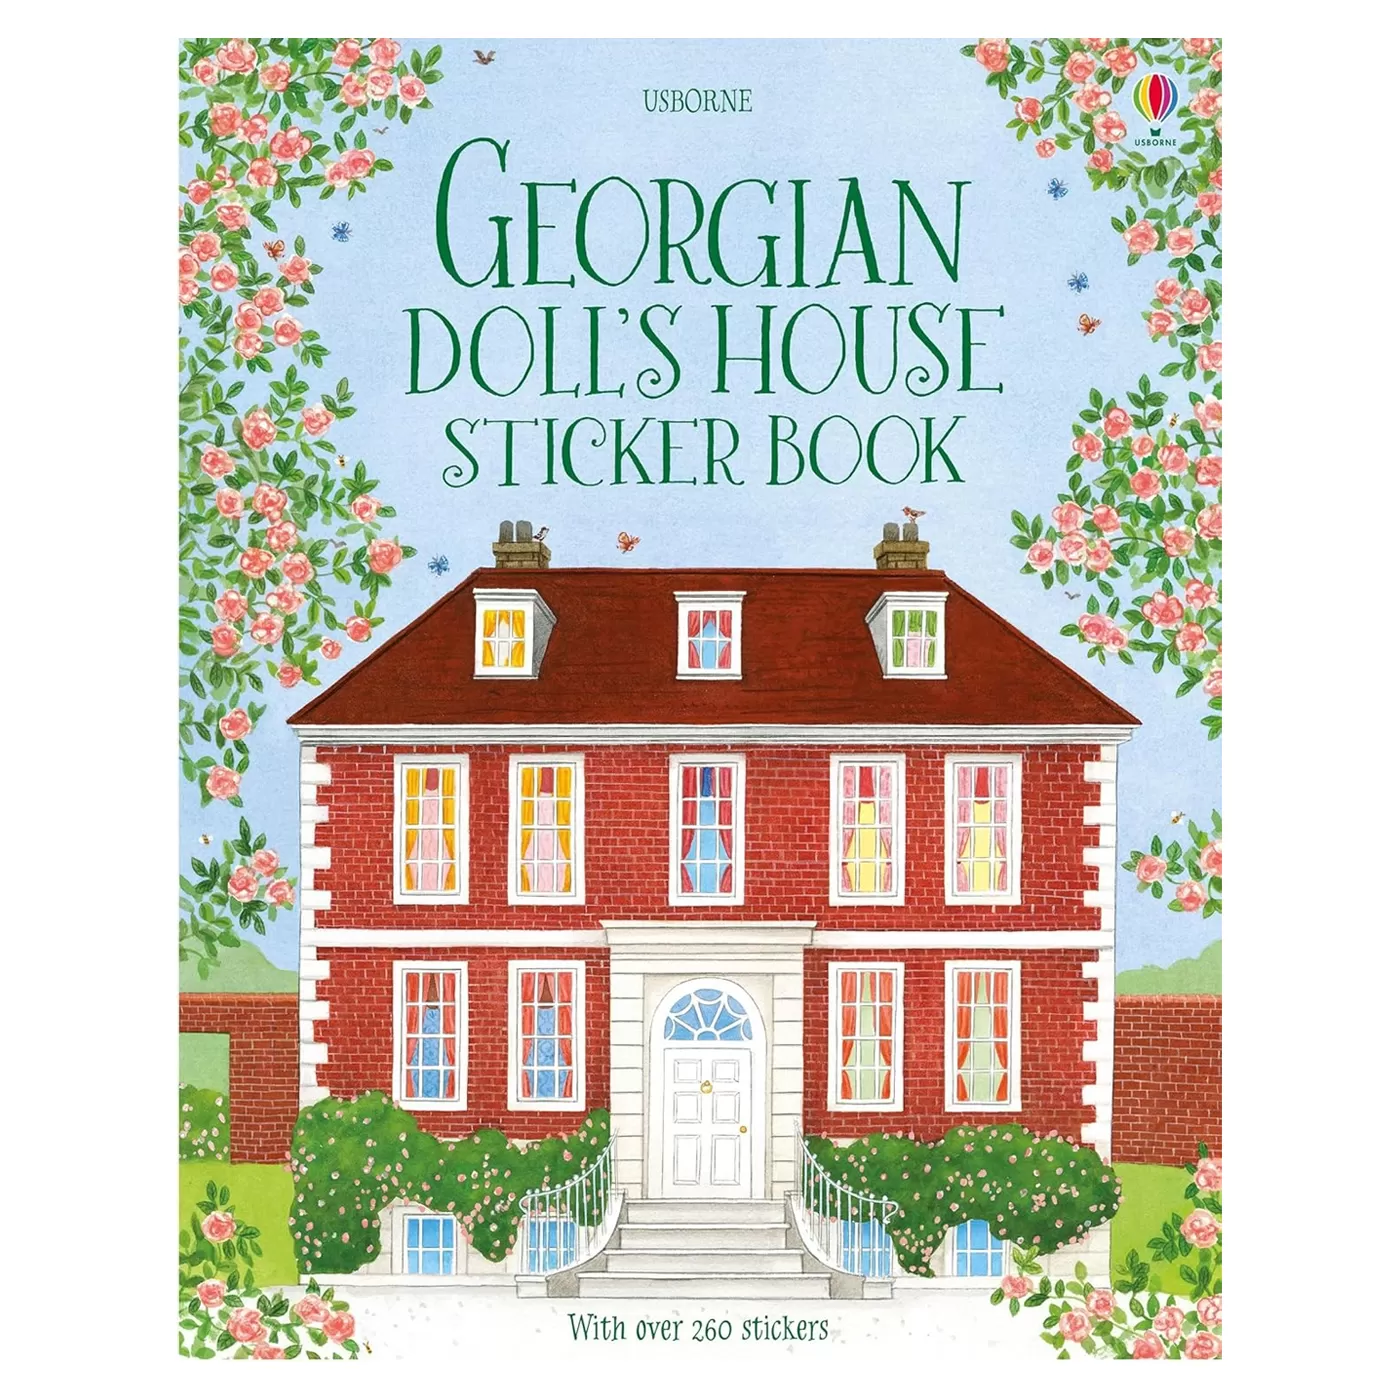  Georgian Doll's House Sticker Book